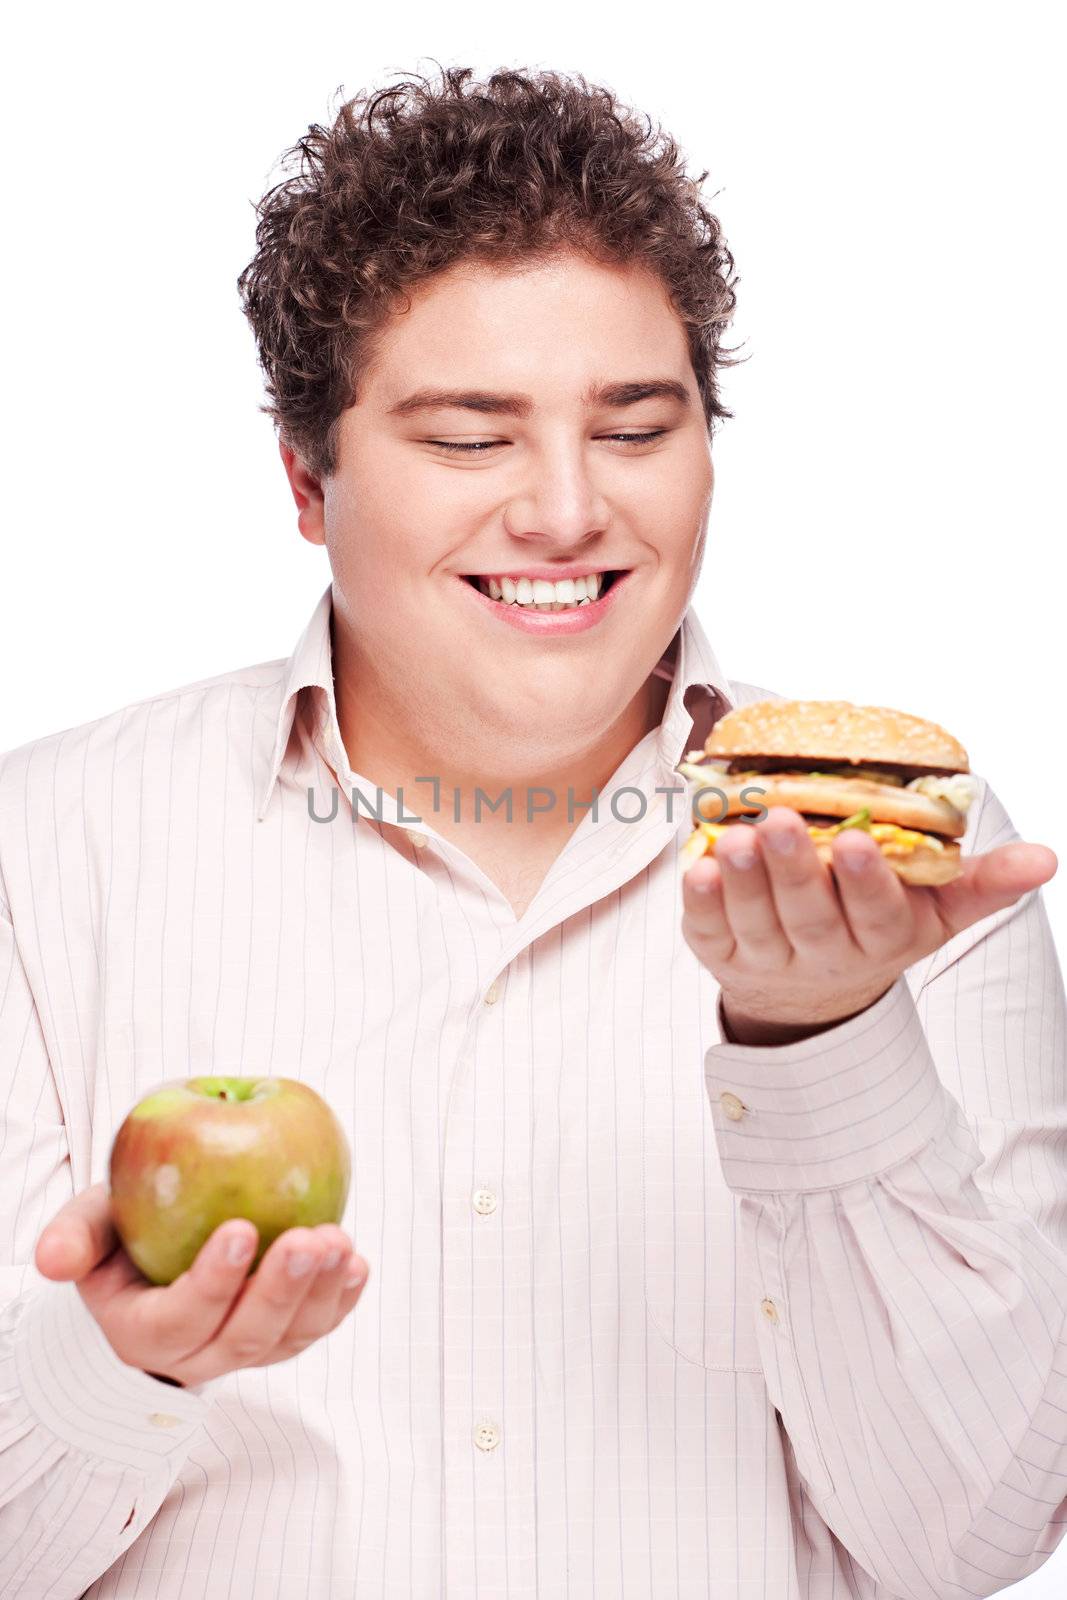 chubby man holding apple and hamburger by imarin